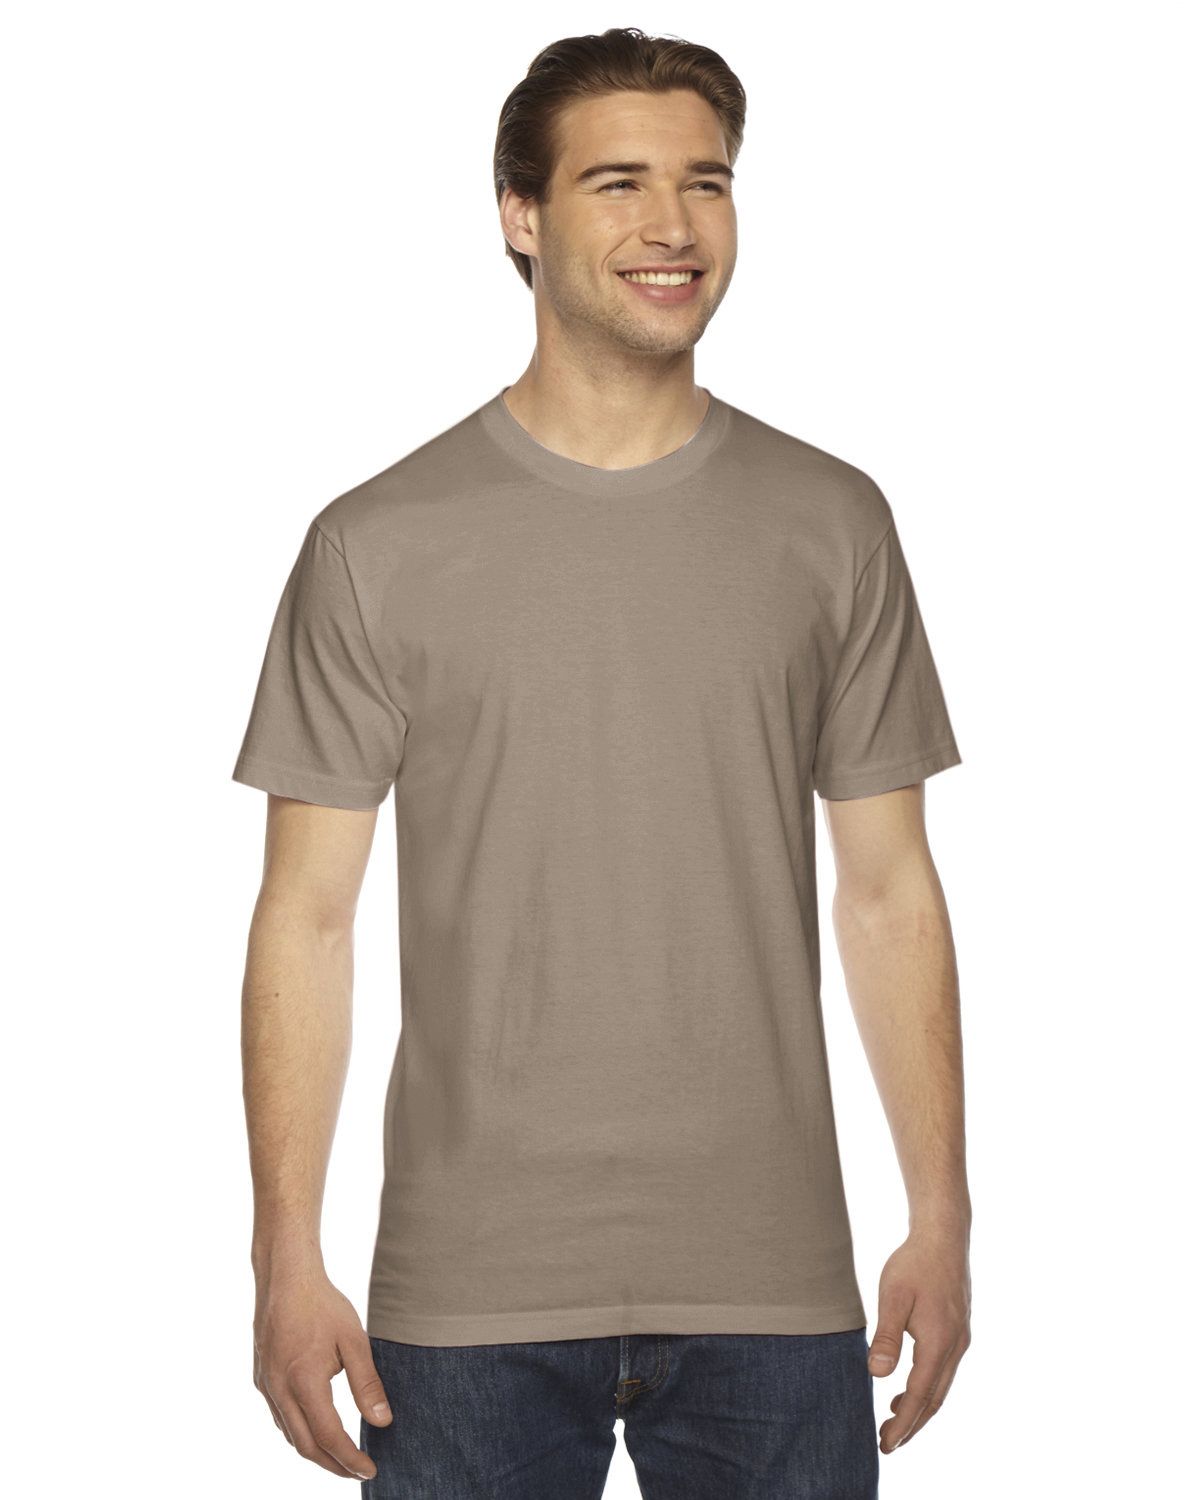 American Apparel 2001 Fine Jersey Short-Sleeve Unisex T-Shirt